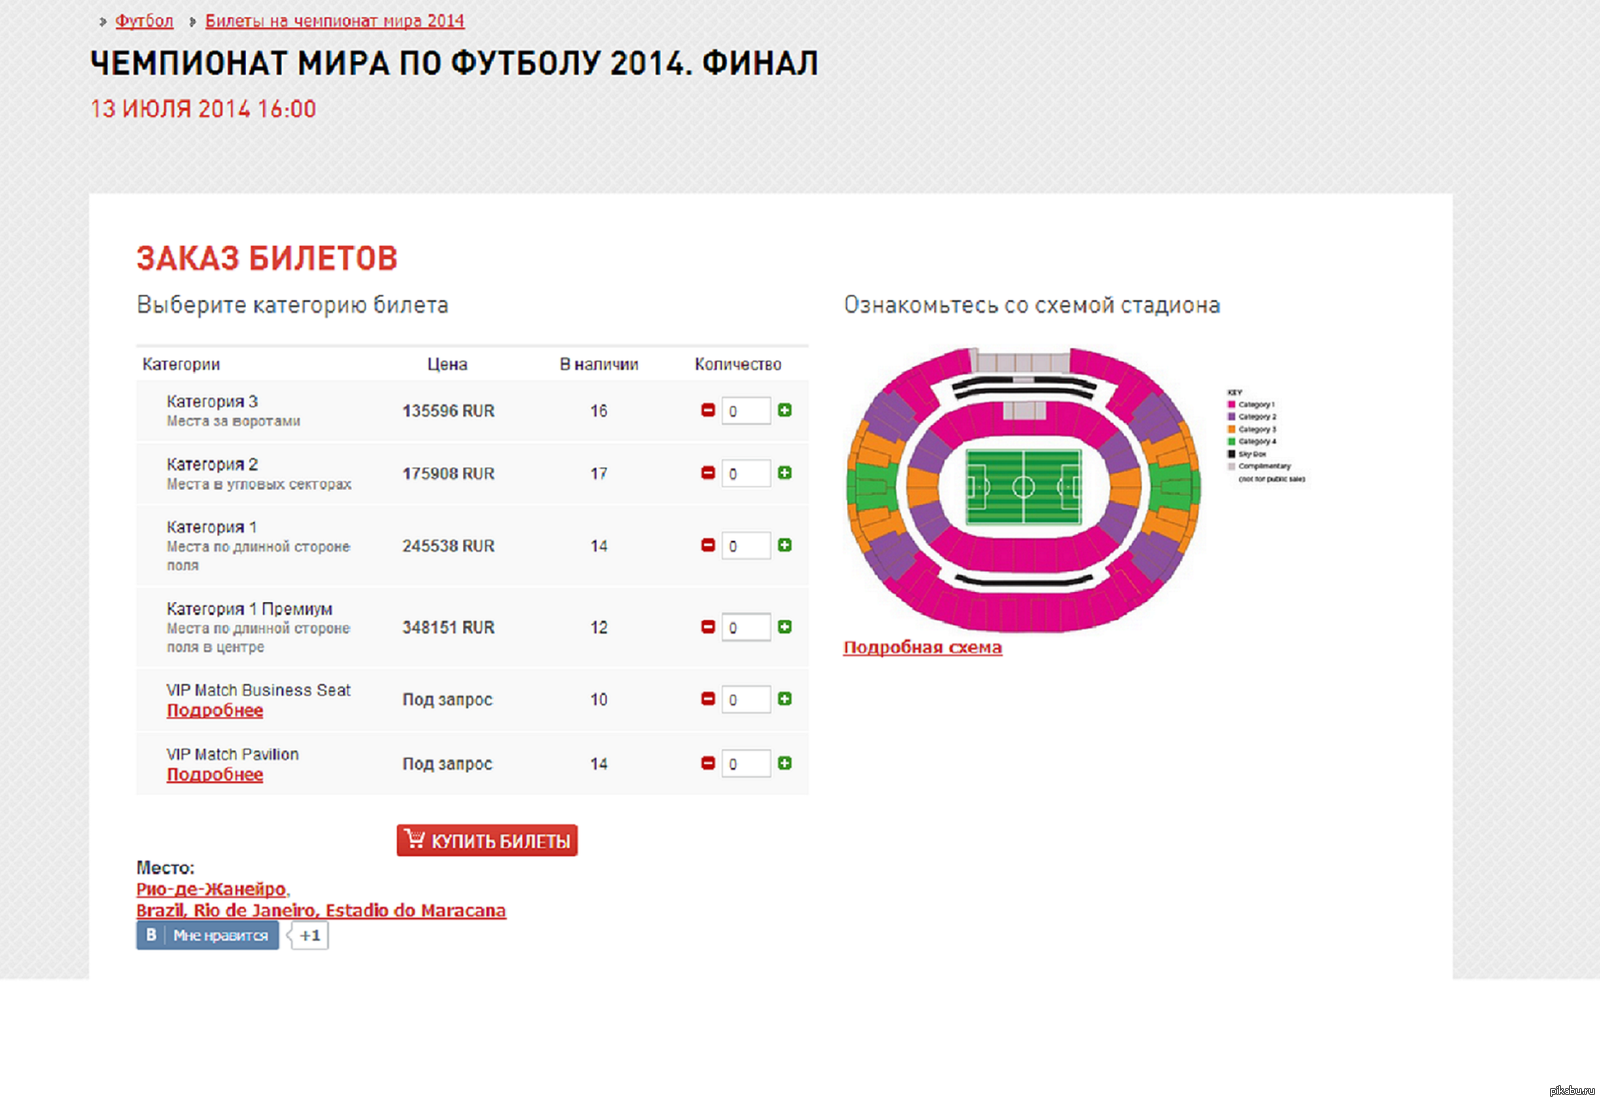 Билет на финал ЧМ по футболу. ЧМ 2014 билеты. Цены на билет на стадион